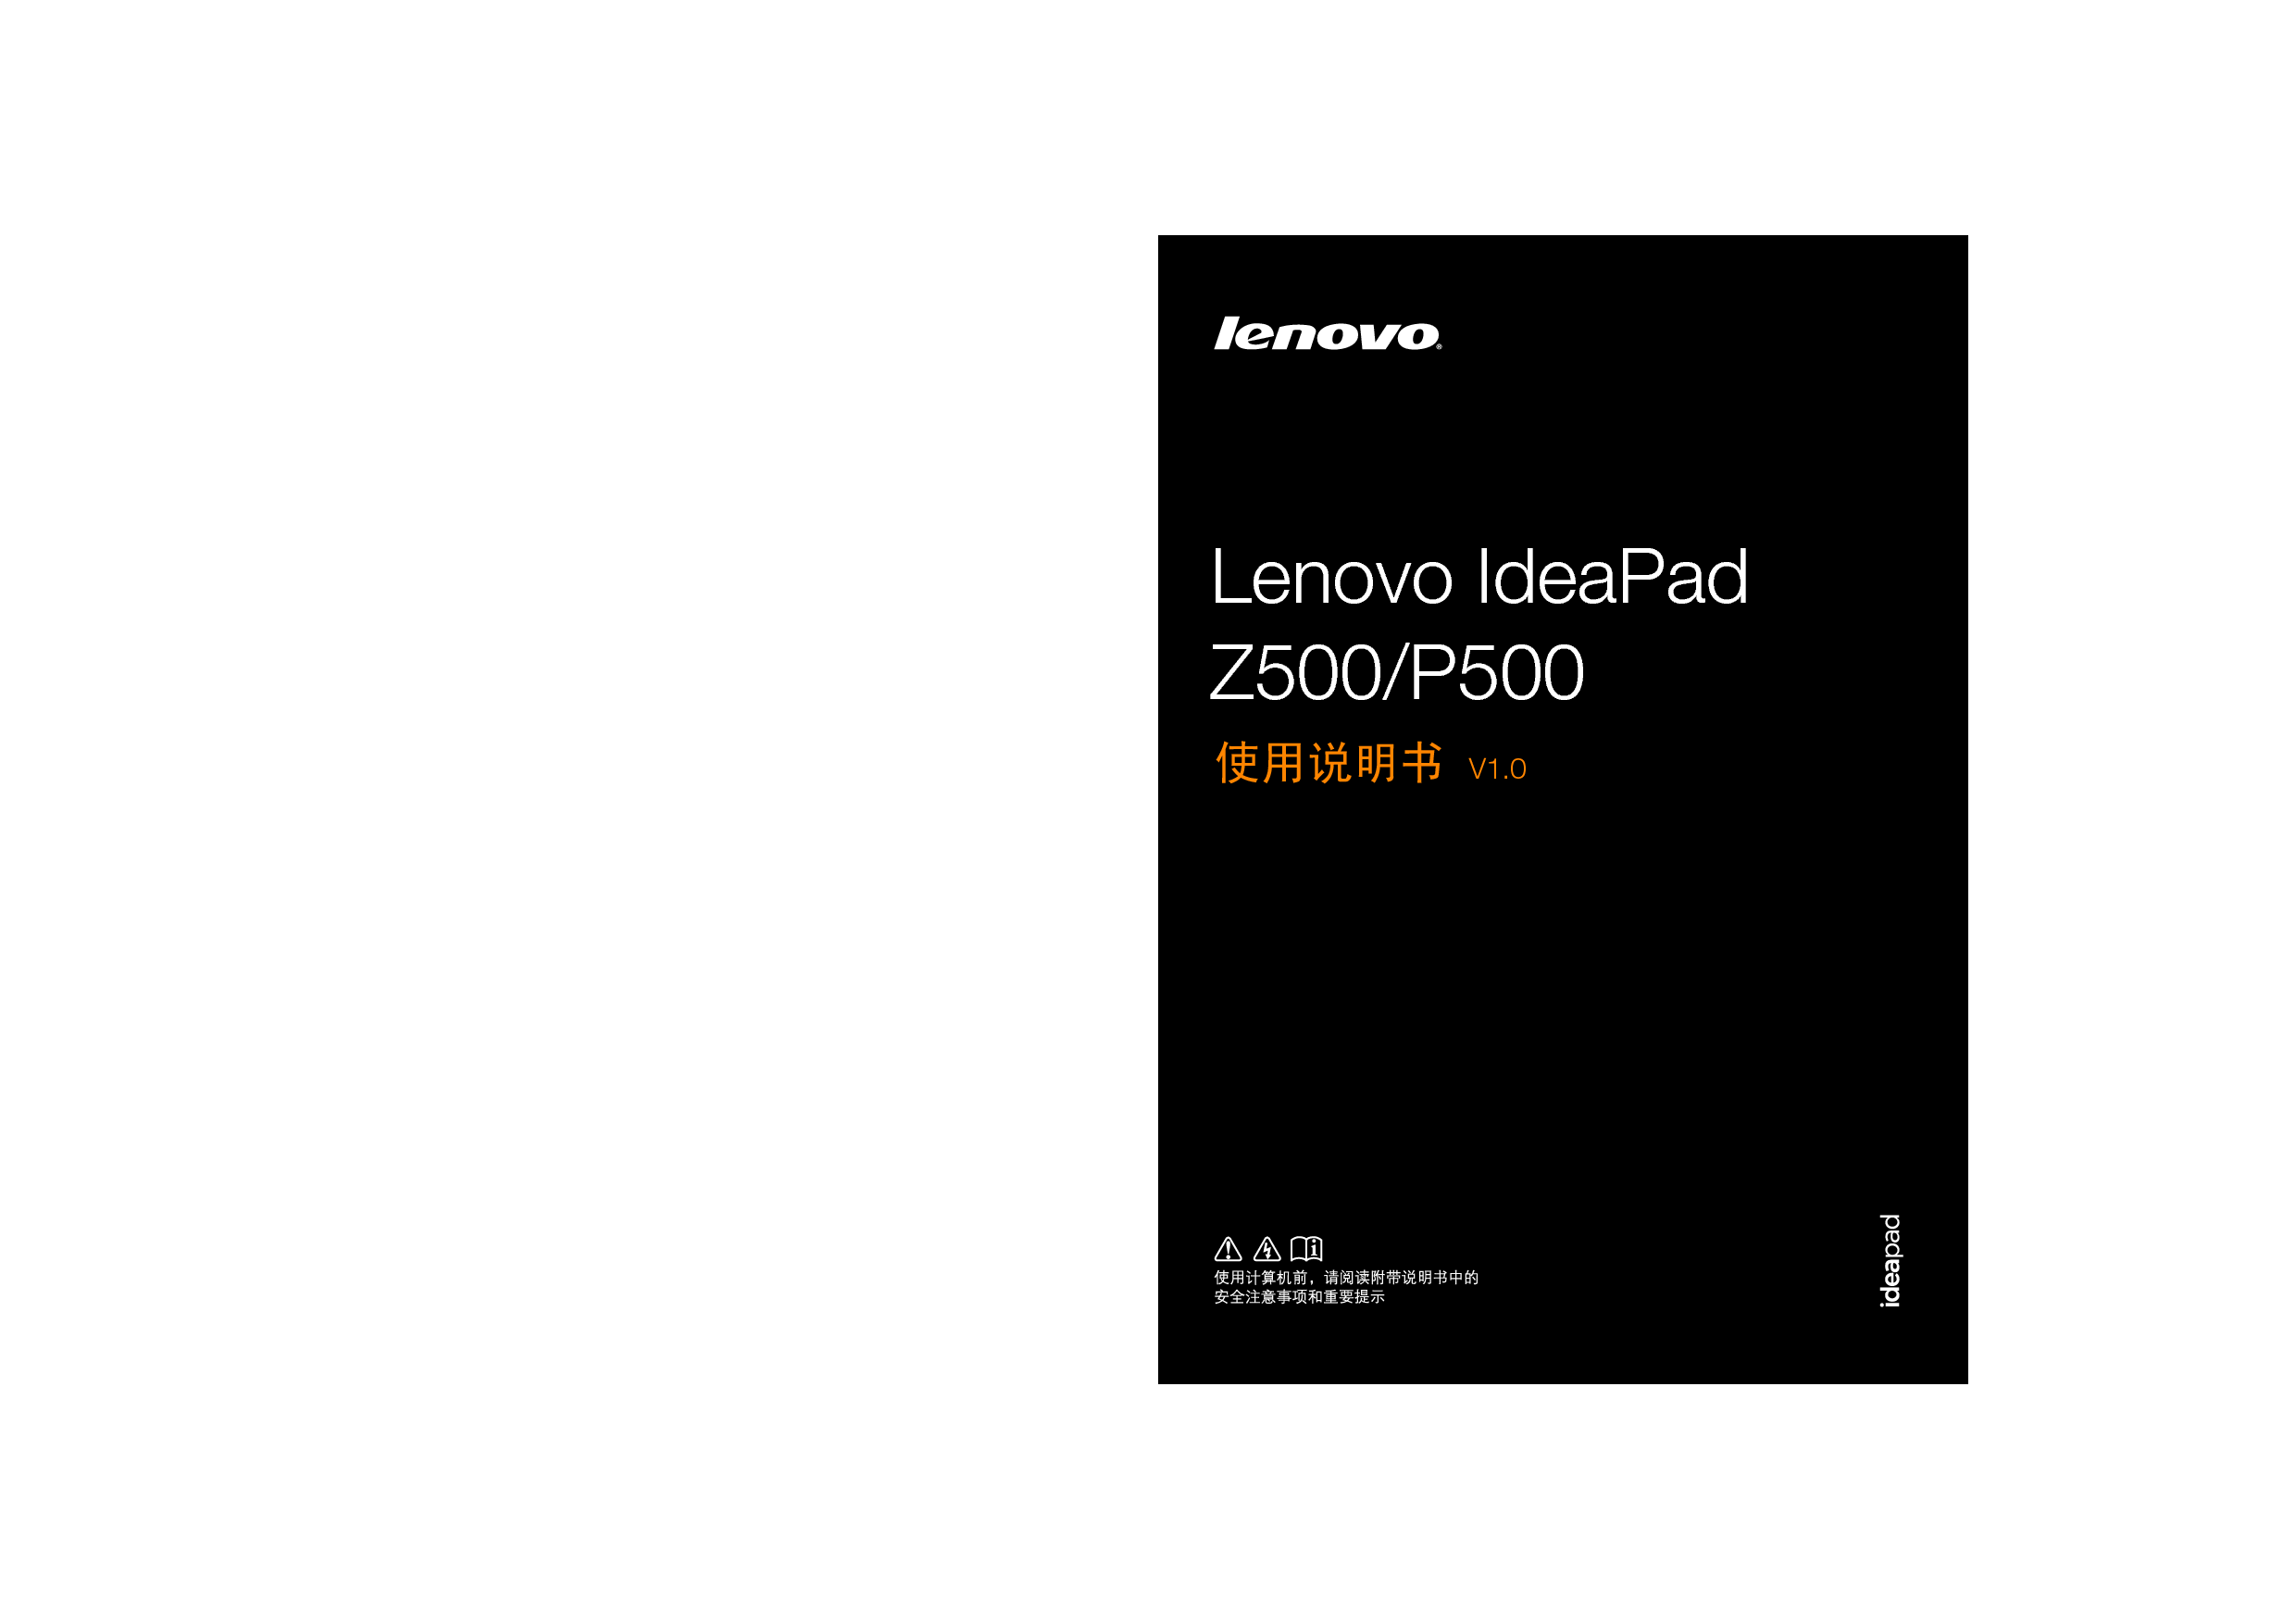 联想 Lenovo IdeaPad P500 使用说明书 封面